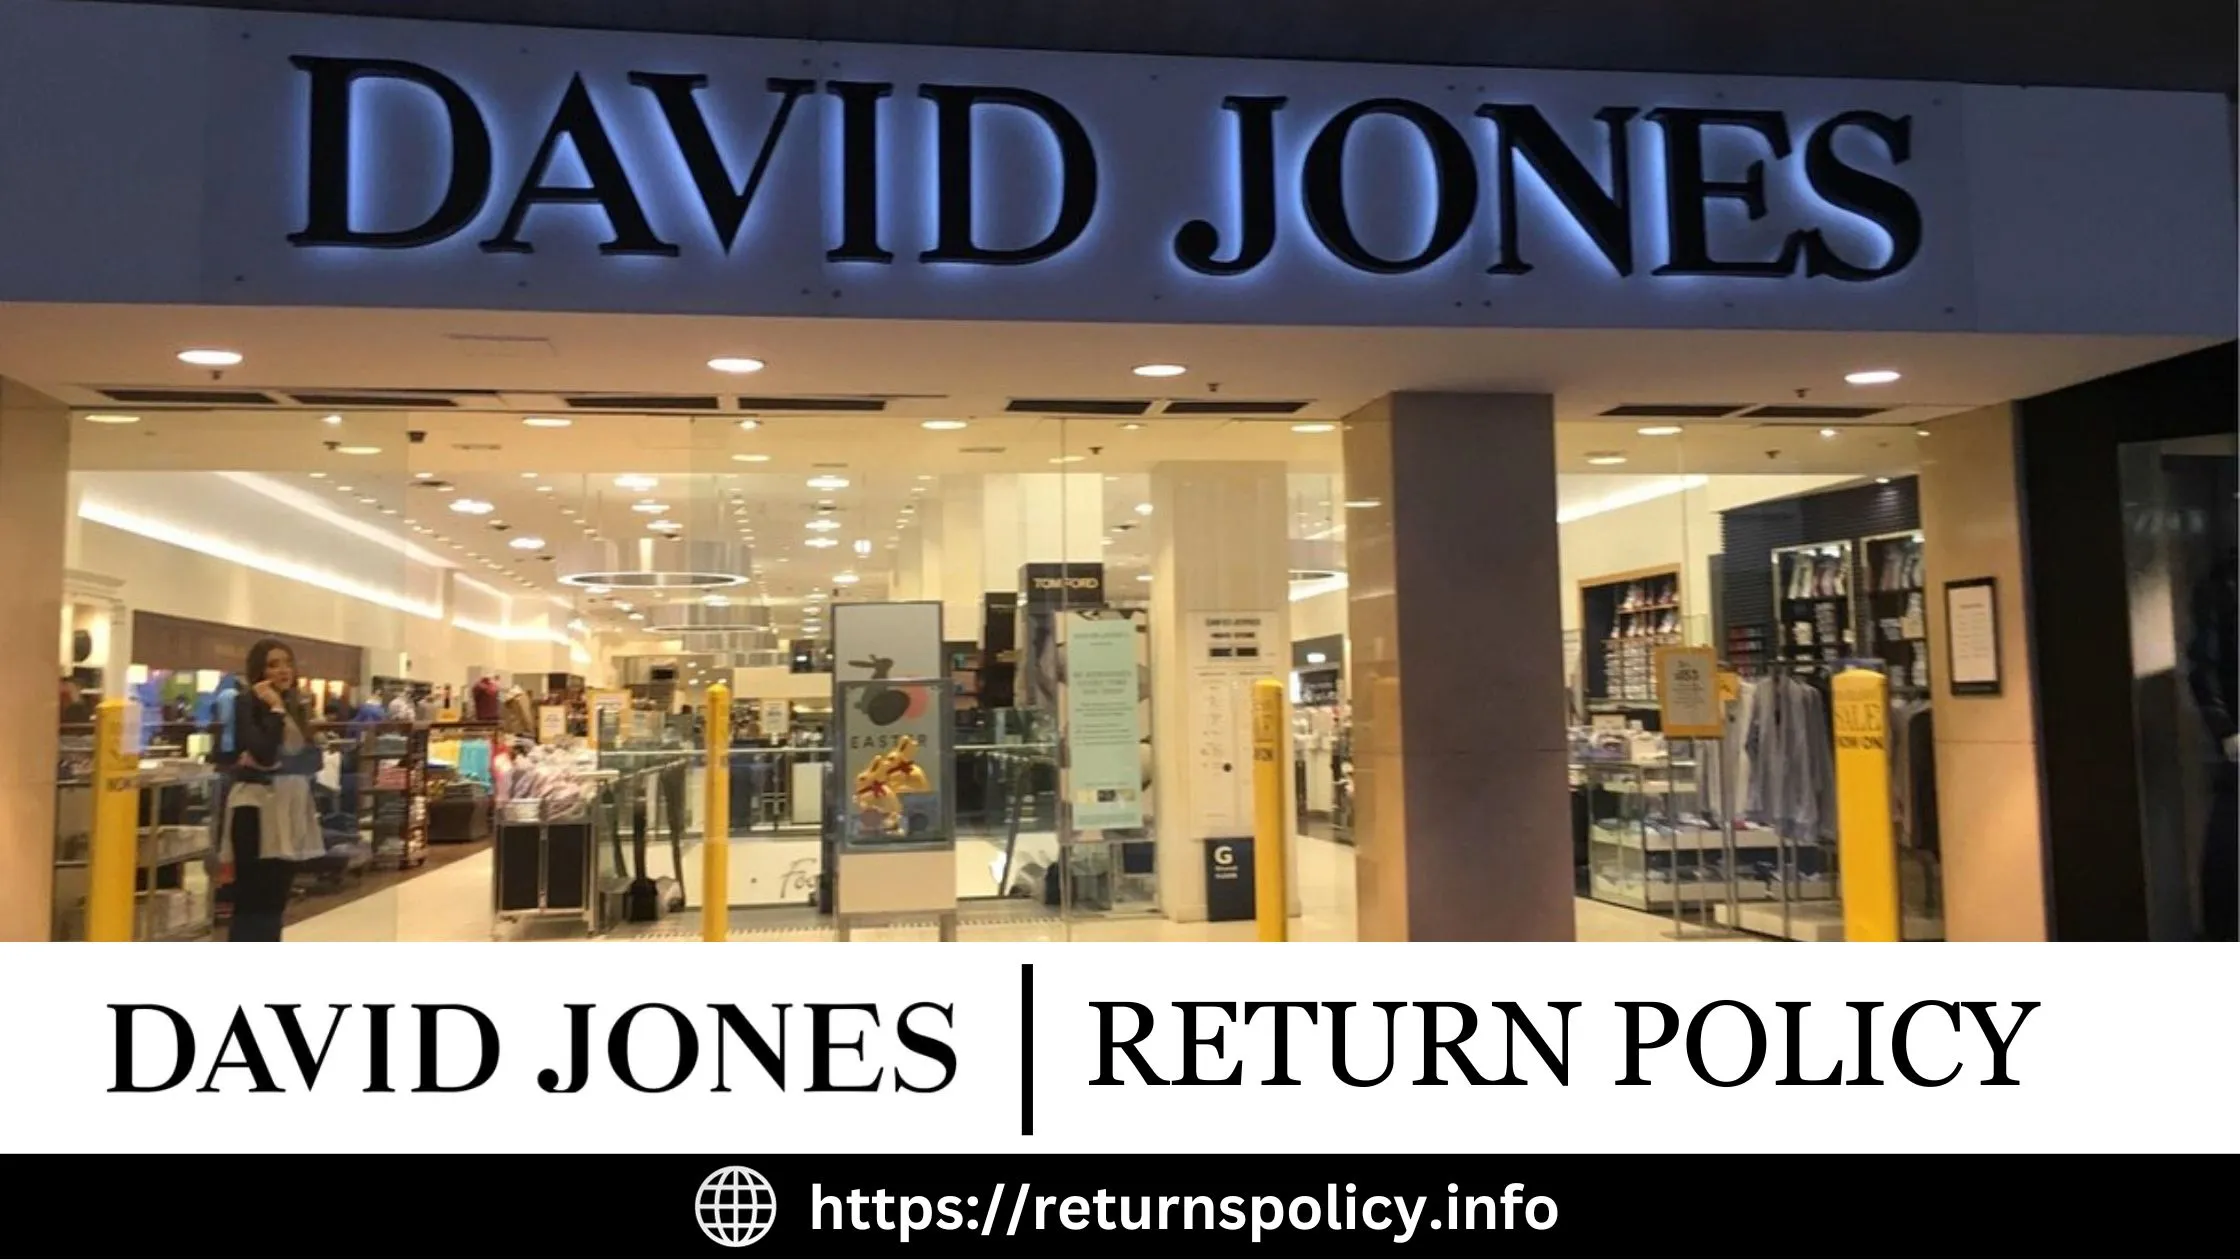 David Jones Return Policy